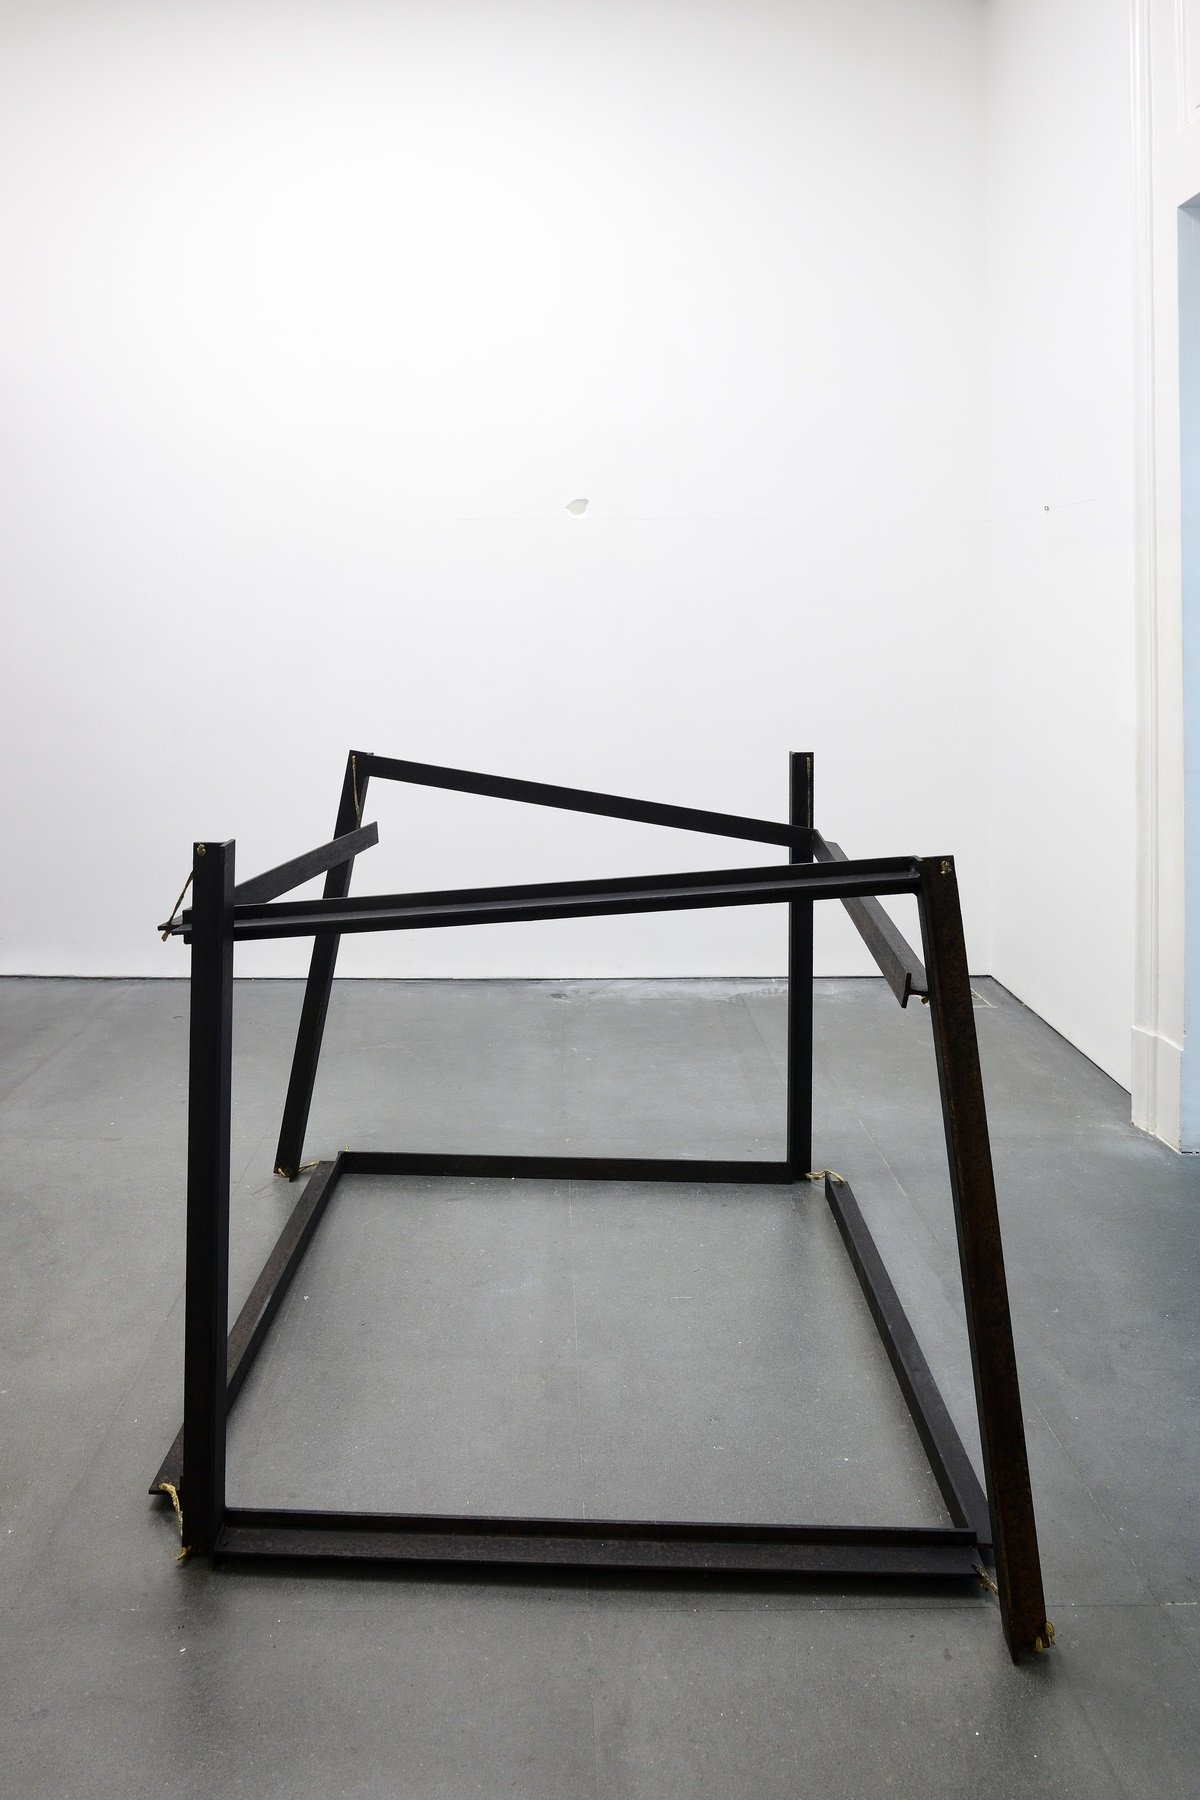 Paolo Icaro, Cuborto, 1968, acciaio, corda, 100x100x100 cm © Paolo Icaro. Photo © Michele Alberto Sereni. Courtesy Galleria Lia Rumma